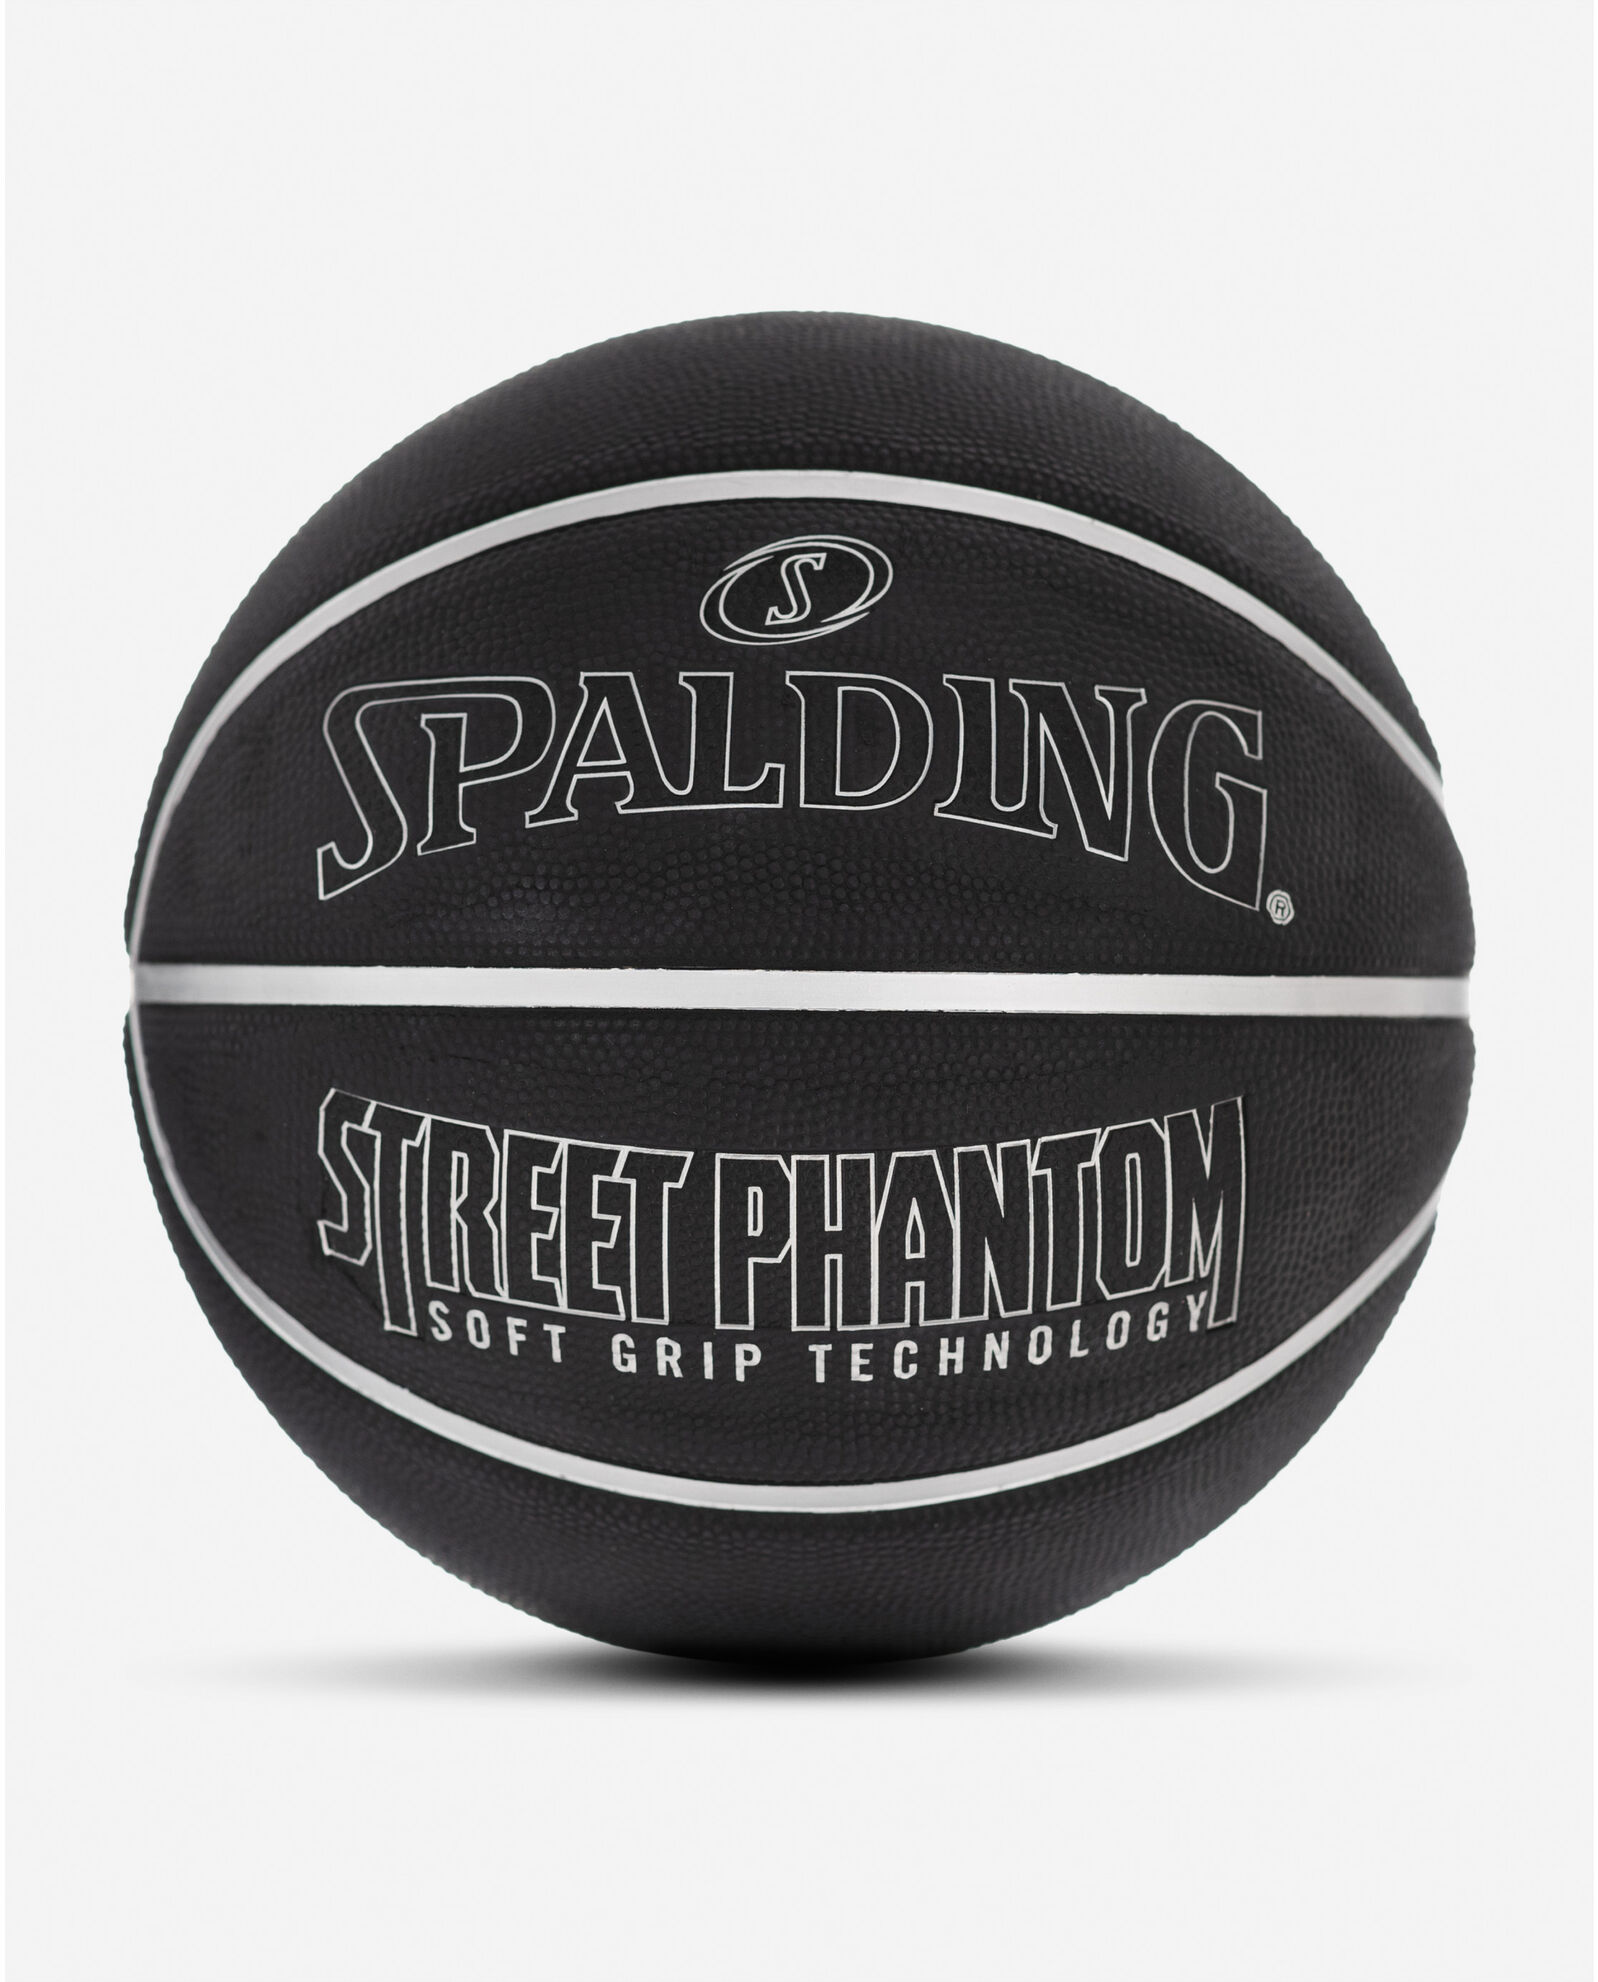 Spalding Street Phantom Silver and Black Outdoor Basketball